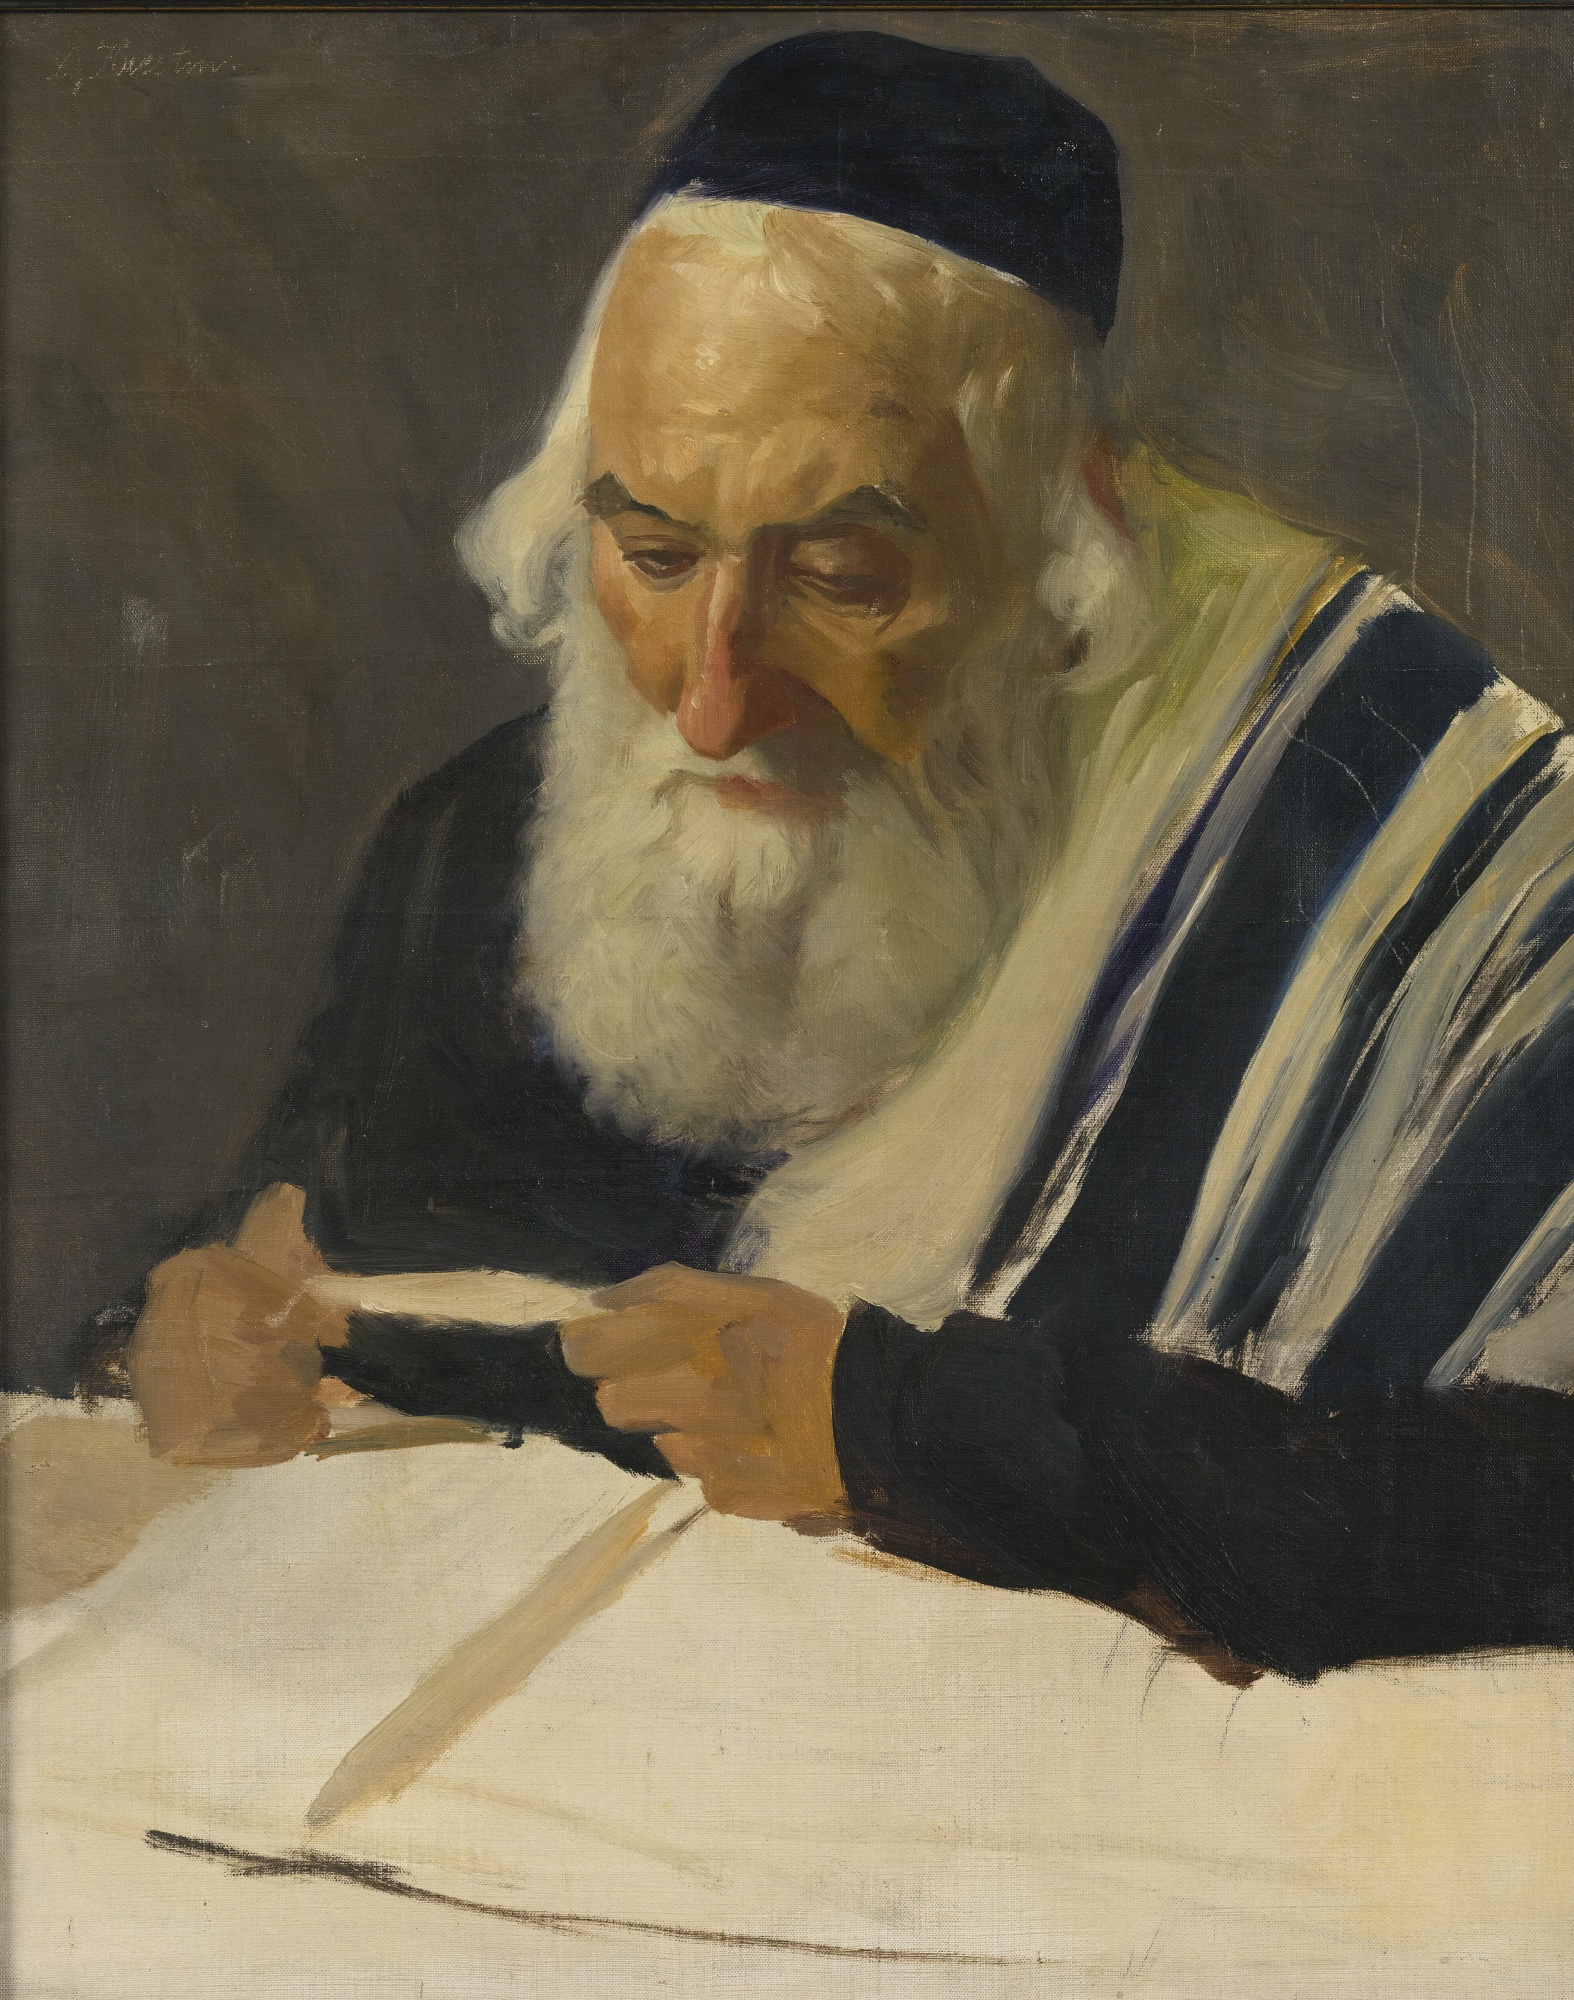 Krestin – Rabbi reading